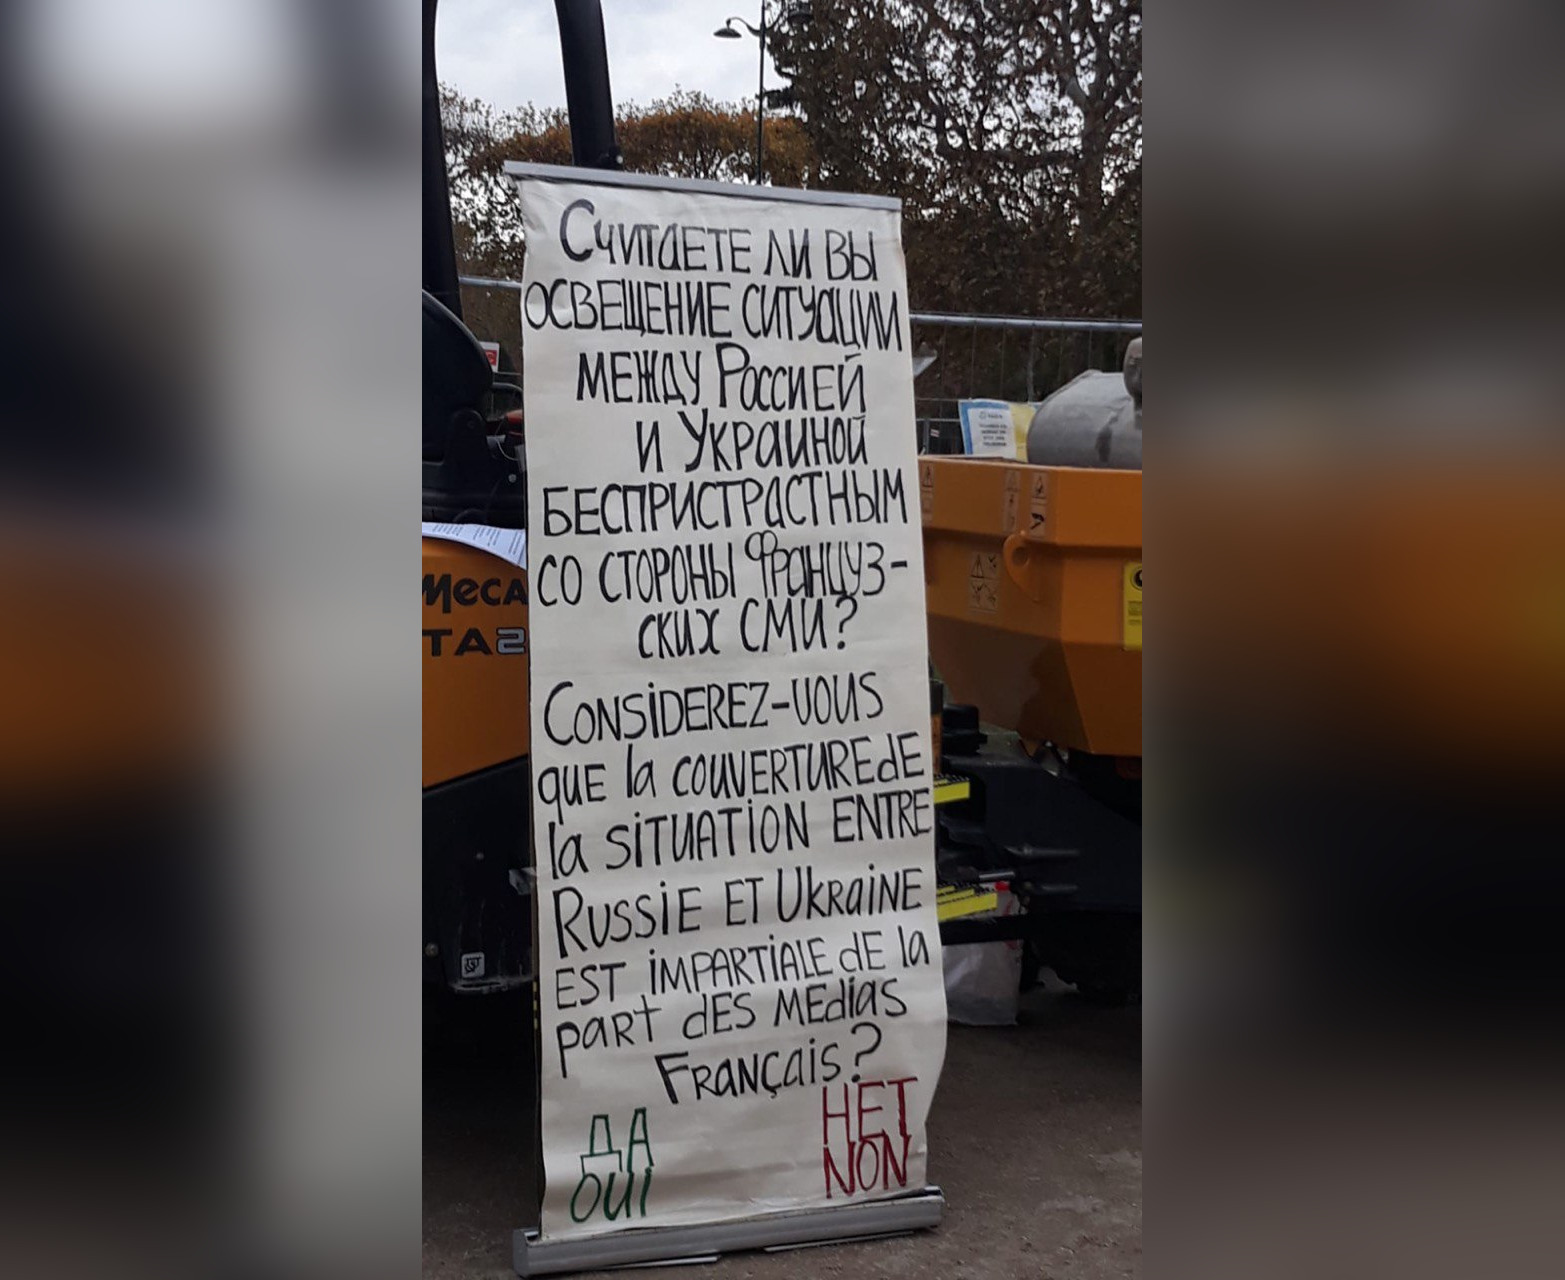 Митинг в поддержку Донбасса в центре Парижа. Фото предоставлено Лайфу